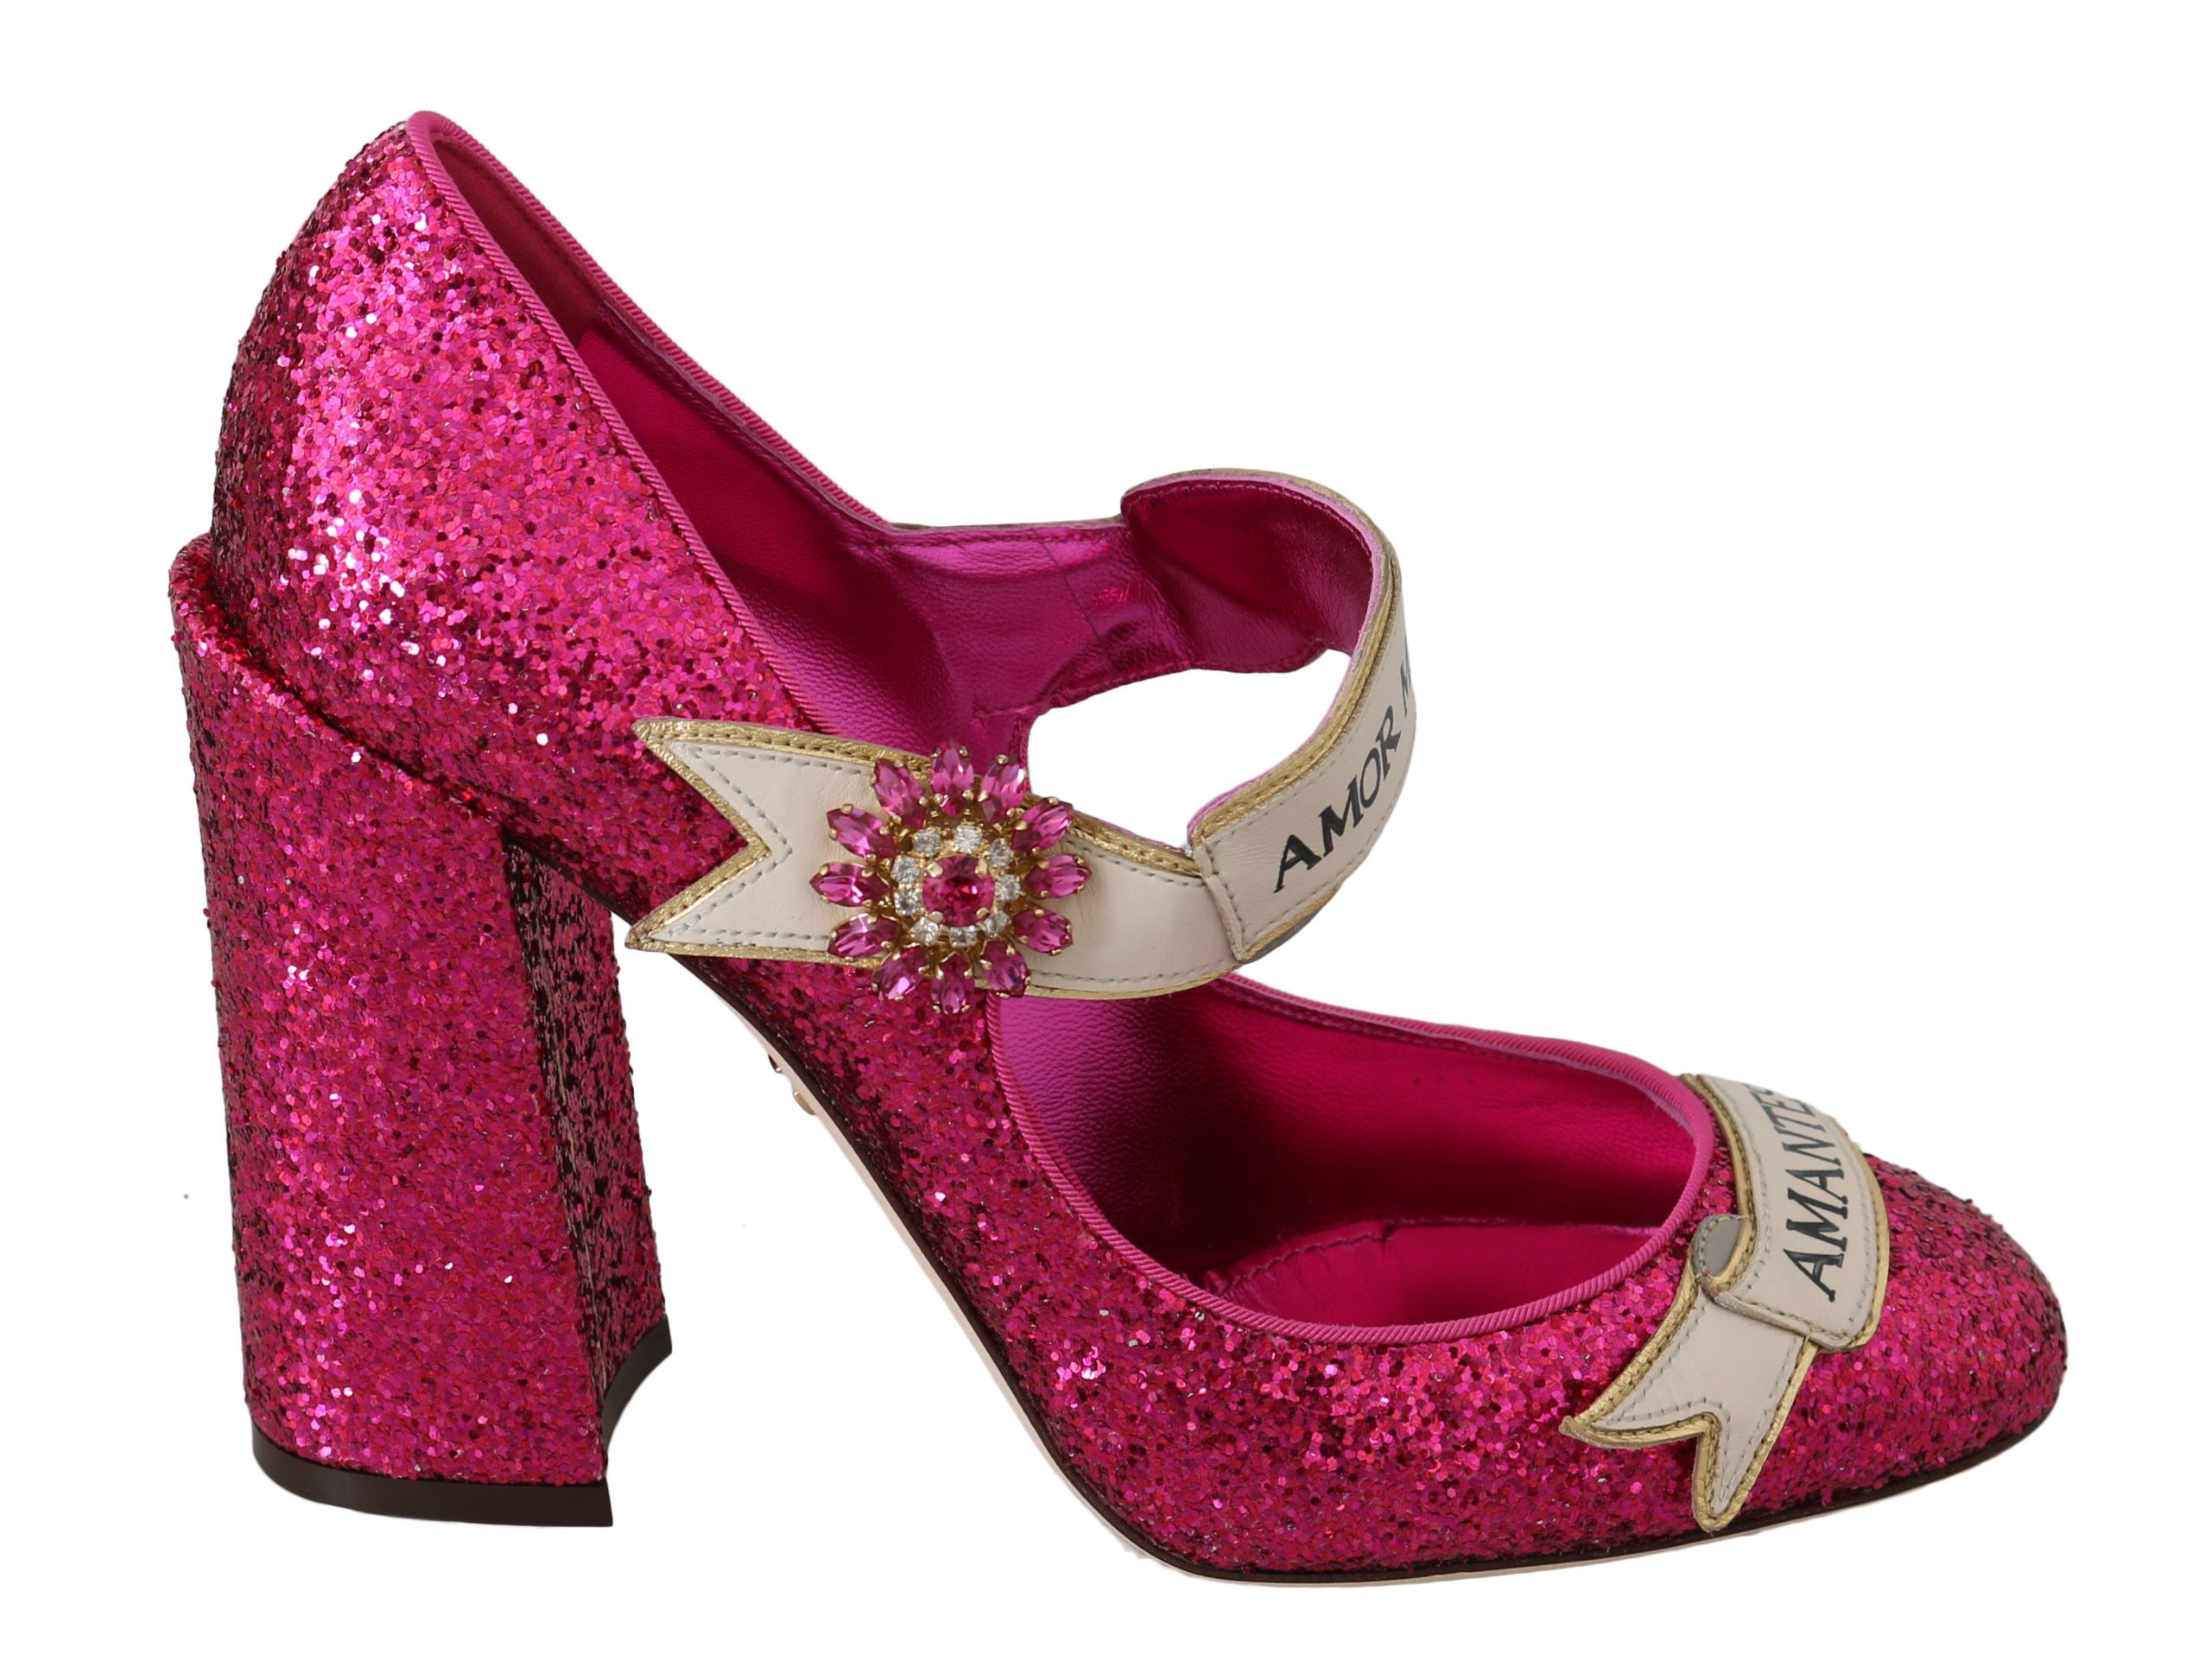 Dolce & Gabbana Women's Crystal AMOR Mary Janes Glitter Pump Pink LA6264 - EU35/US4.5